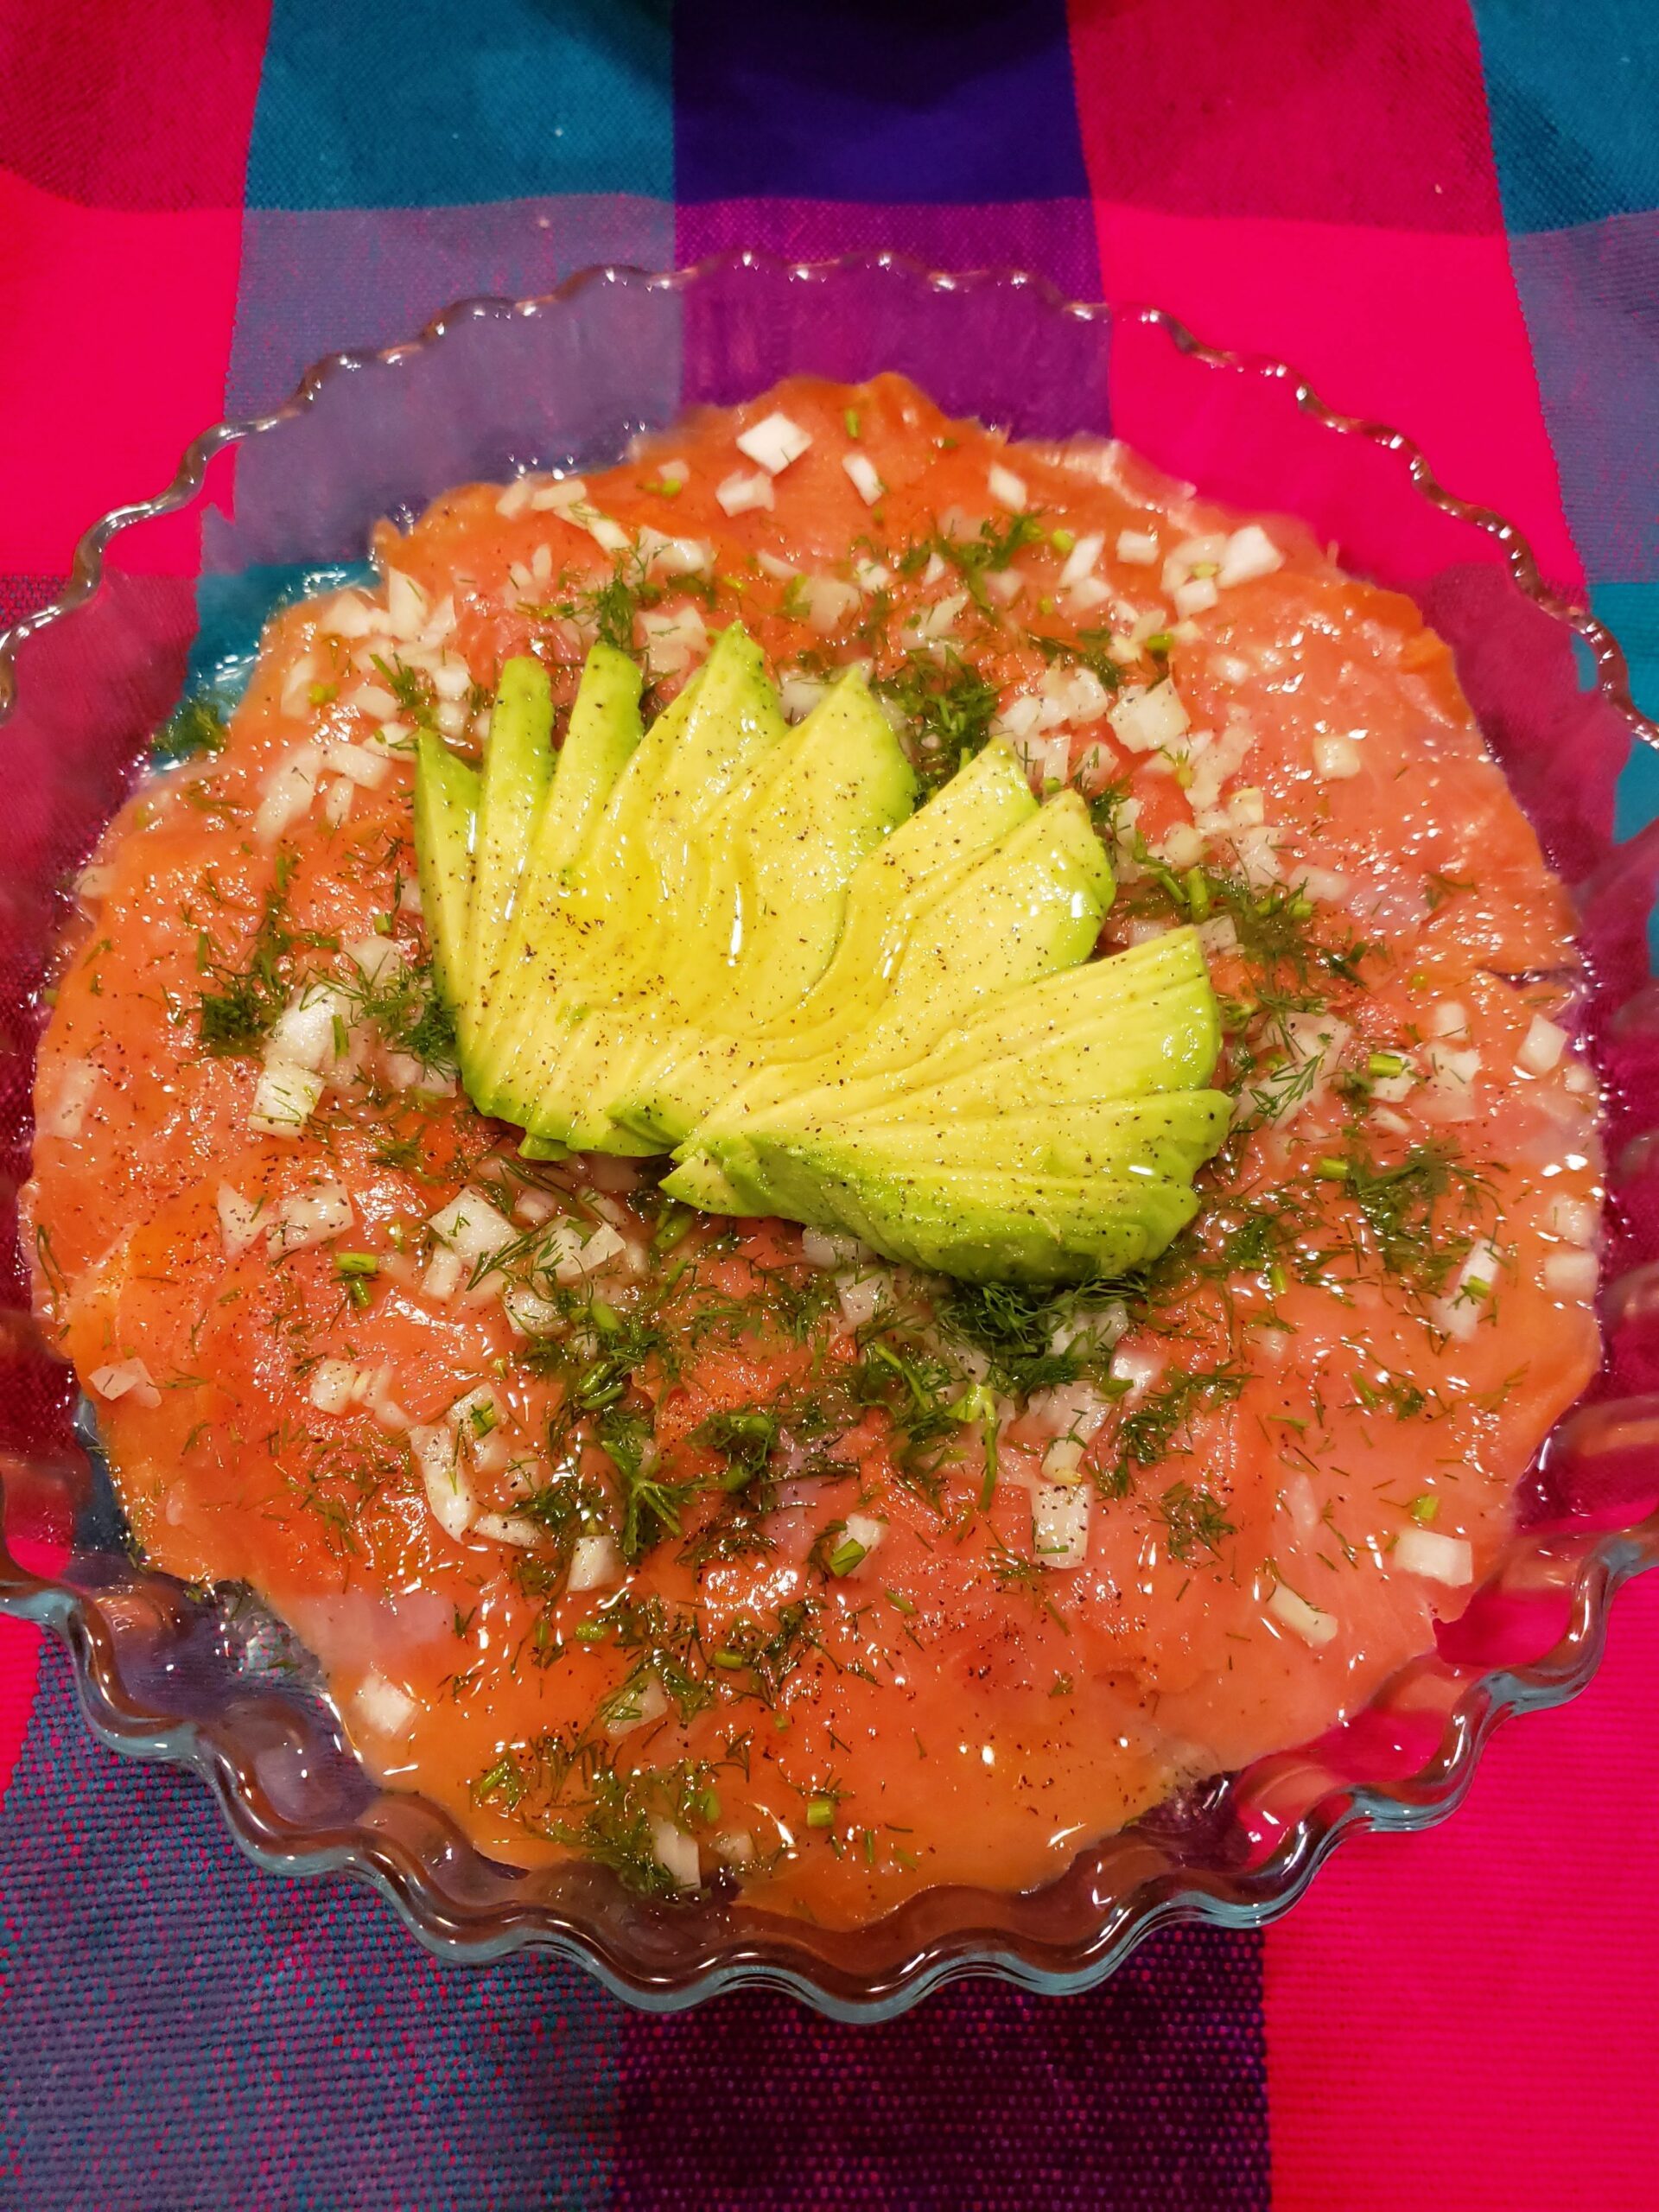 Salmon Carpaccio with Avocado on Top